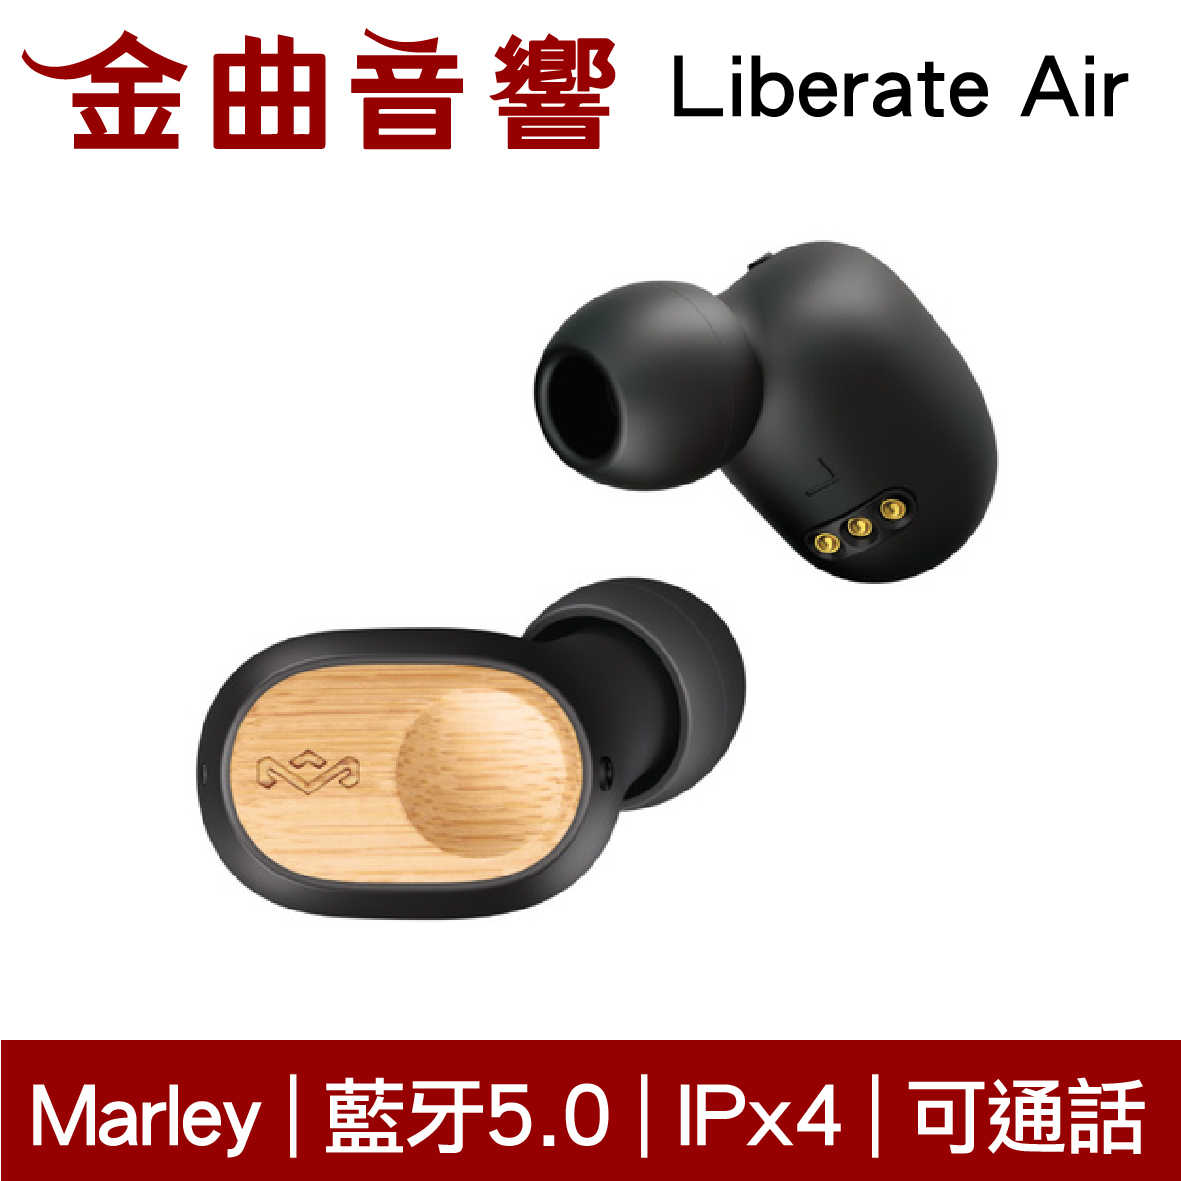 Marley Liberate Air 真無線 藍芽耳機 IPx4 | 金曲音響